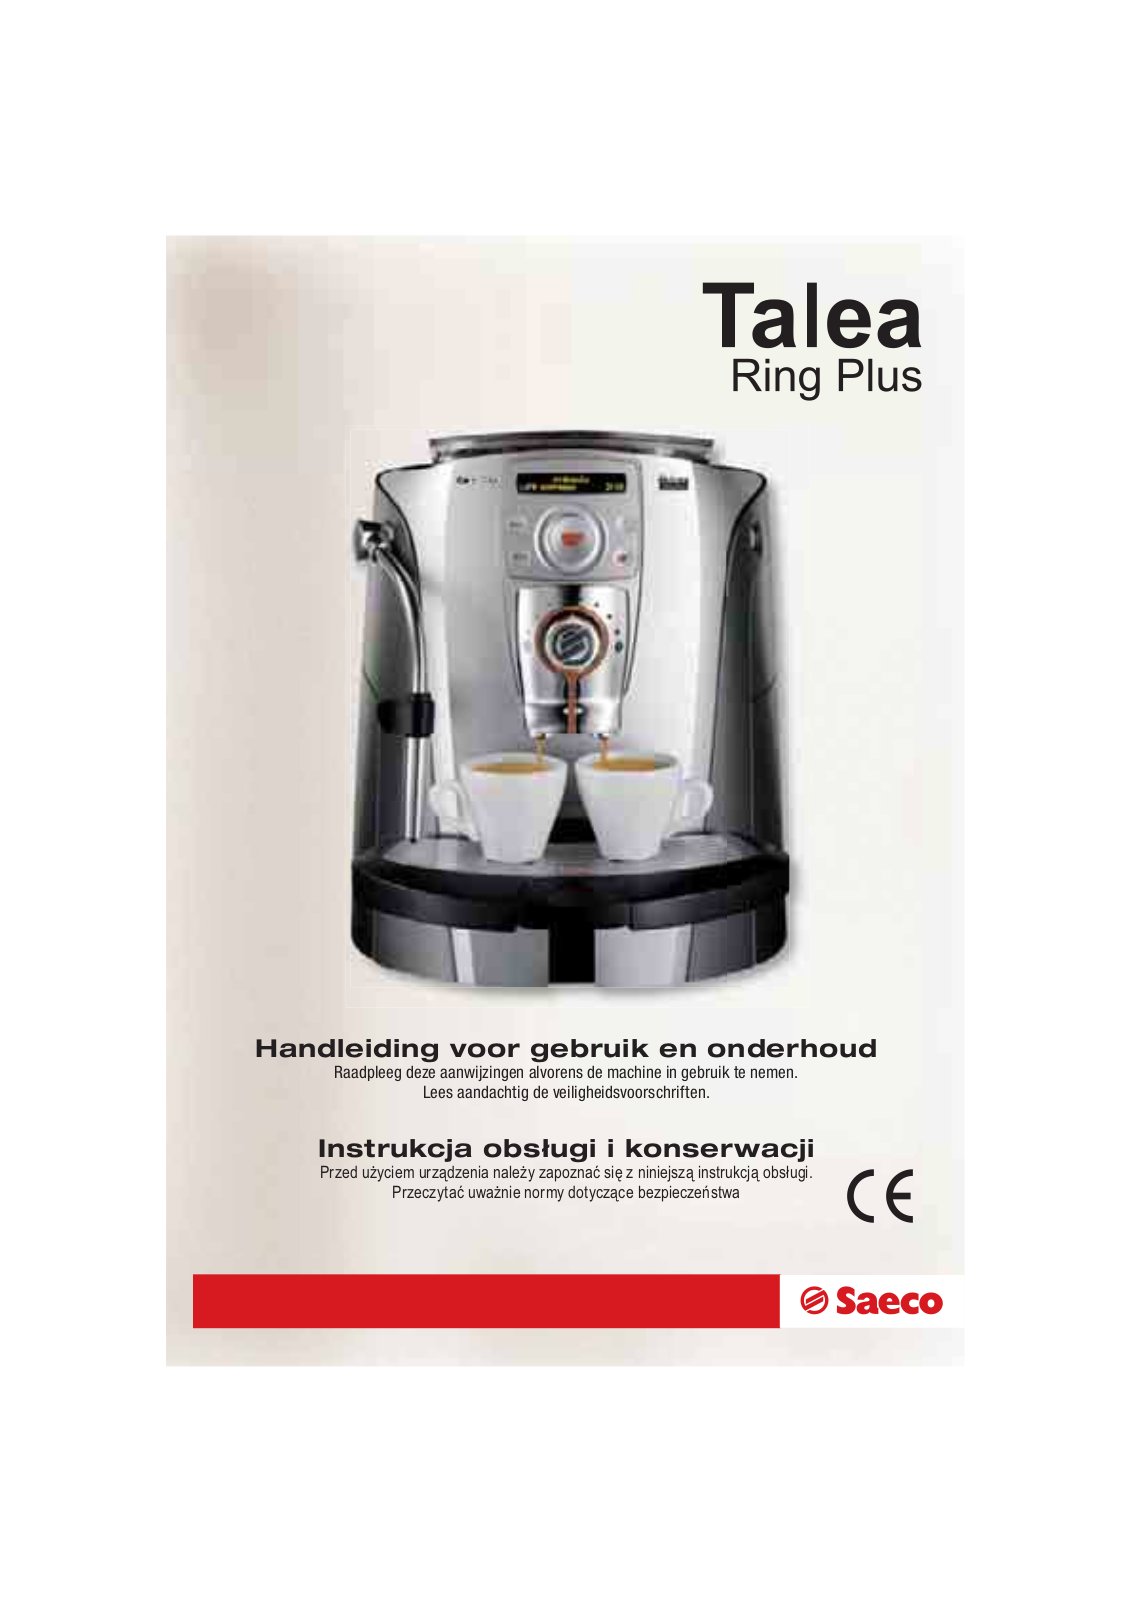 Saeco TALEA RING PLUS User Manual